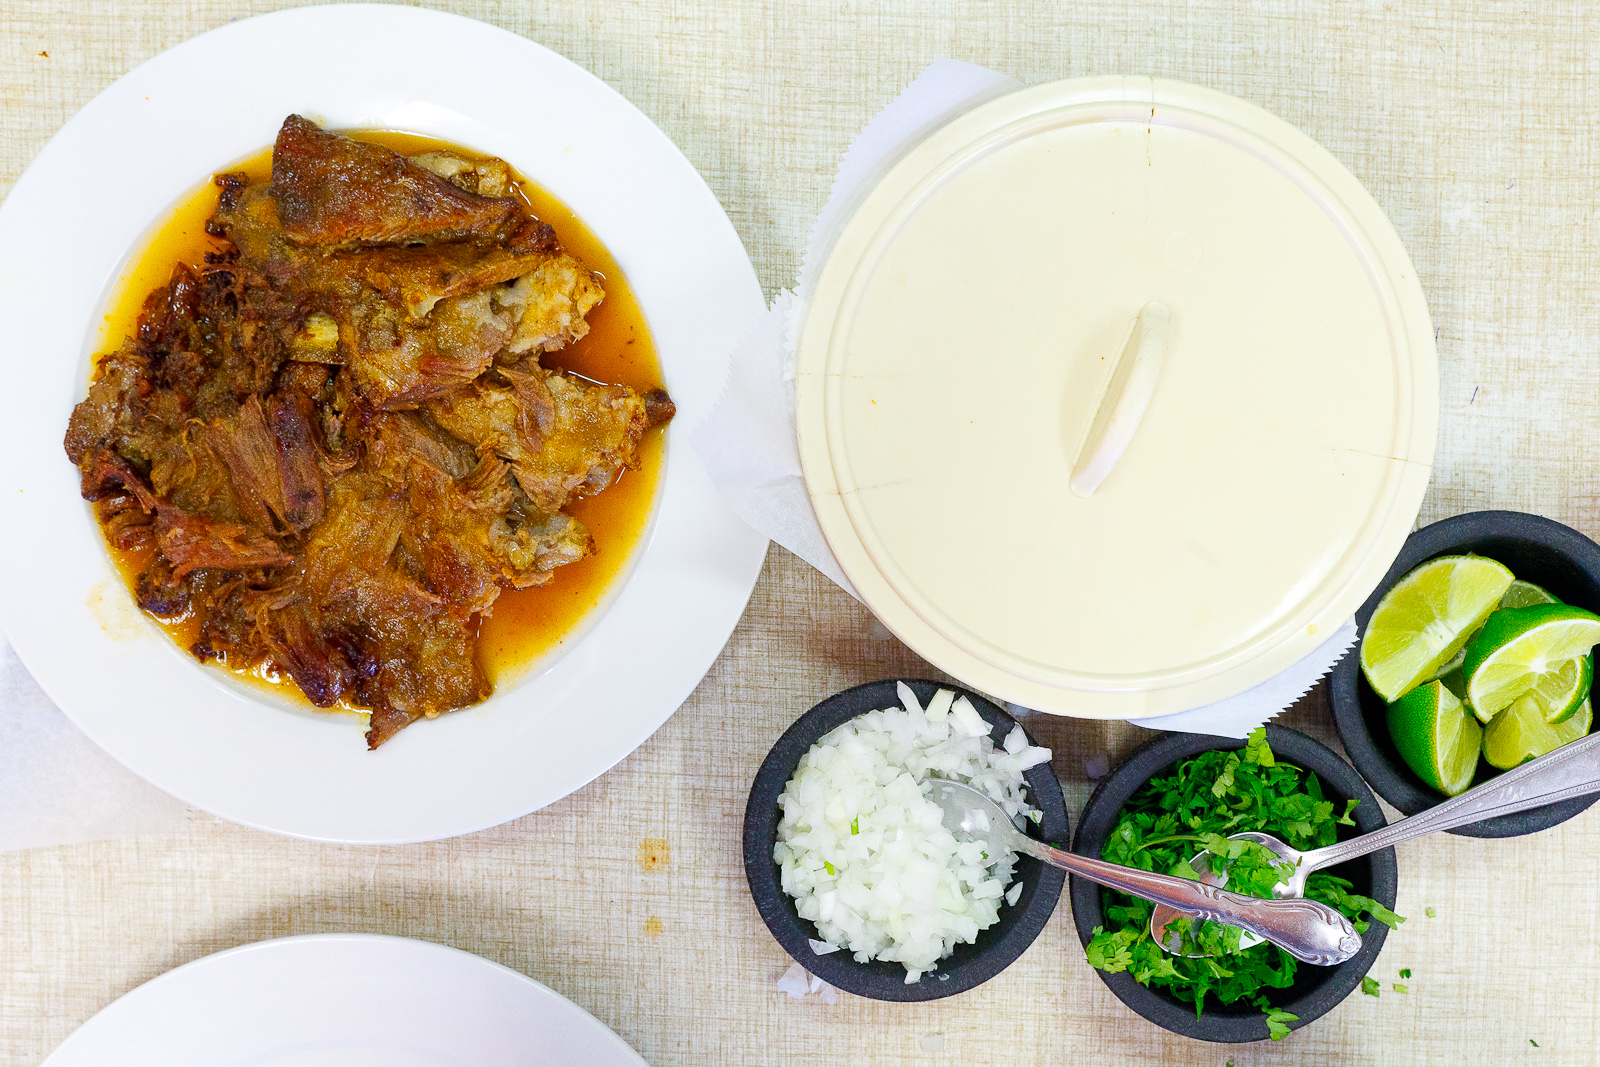 Bírria (goat stew) with accompaniments